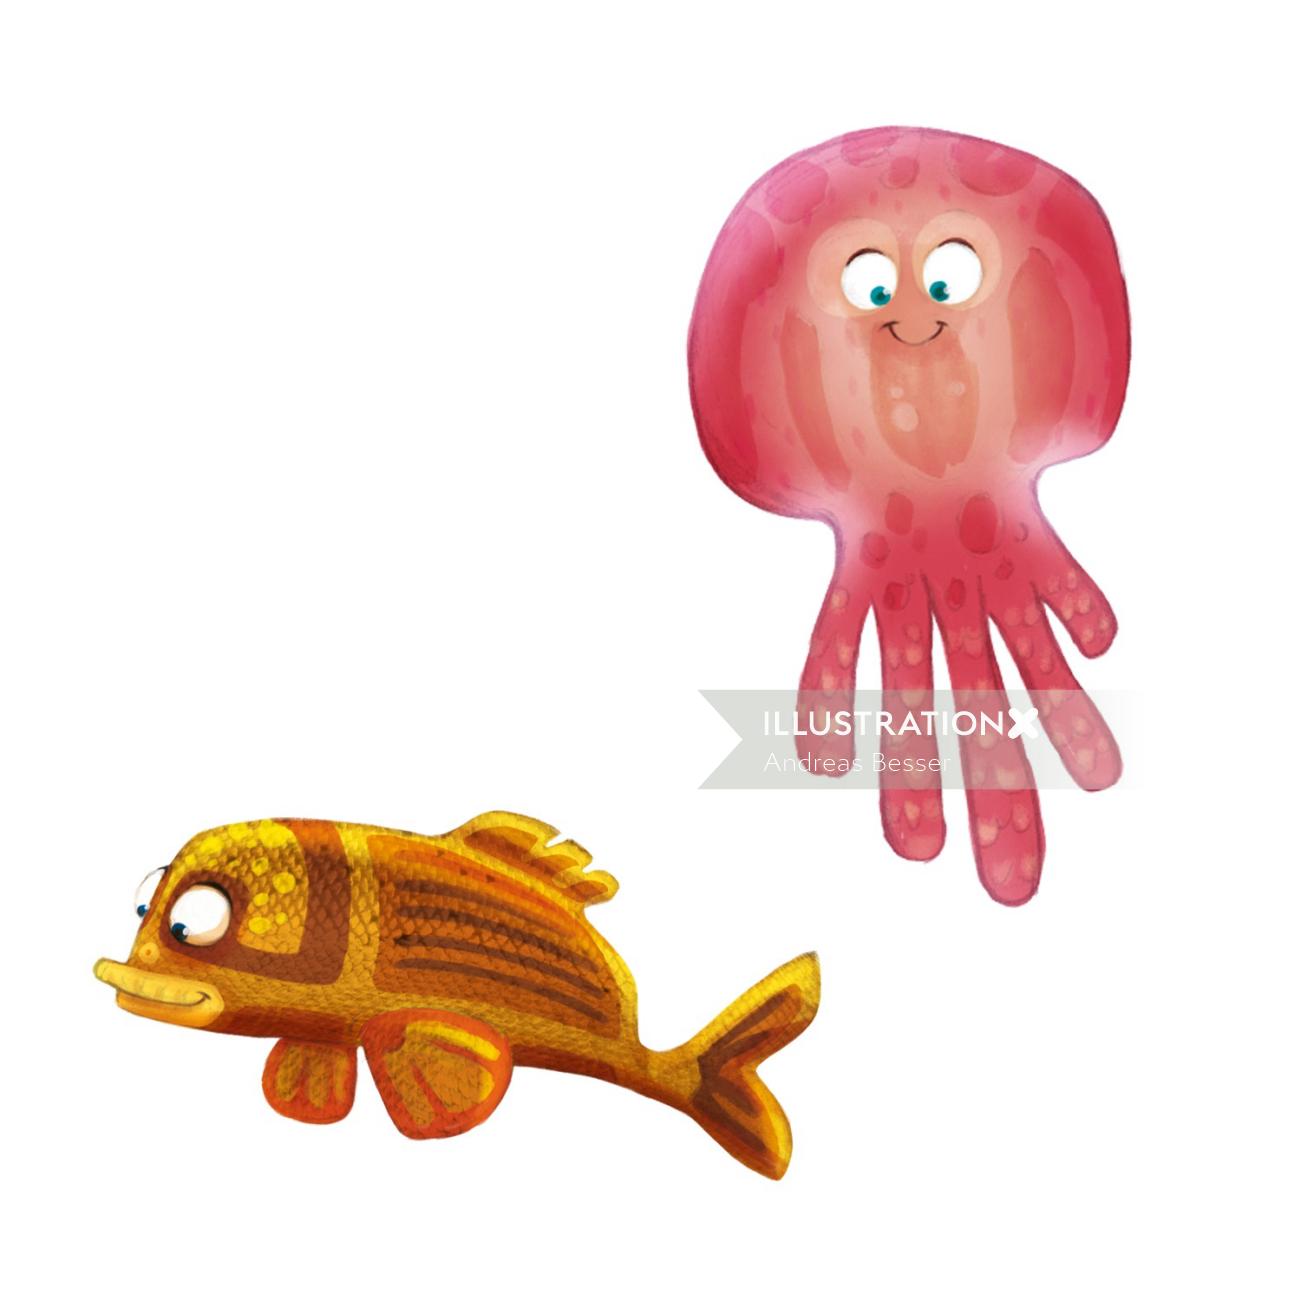 Animal cartoon design of jelly fish and gold fish
